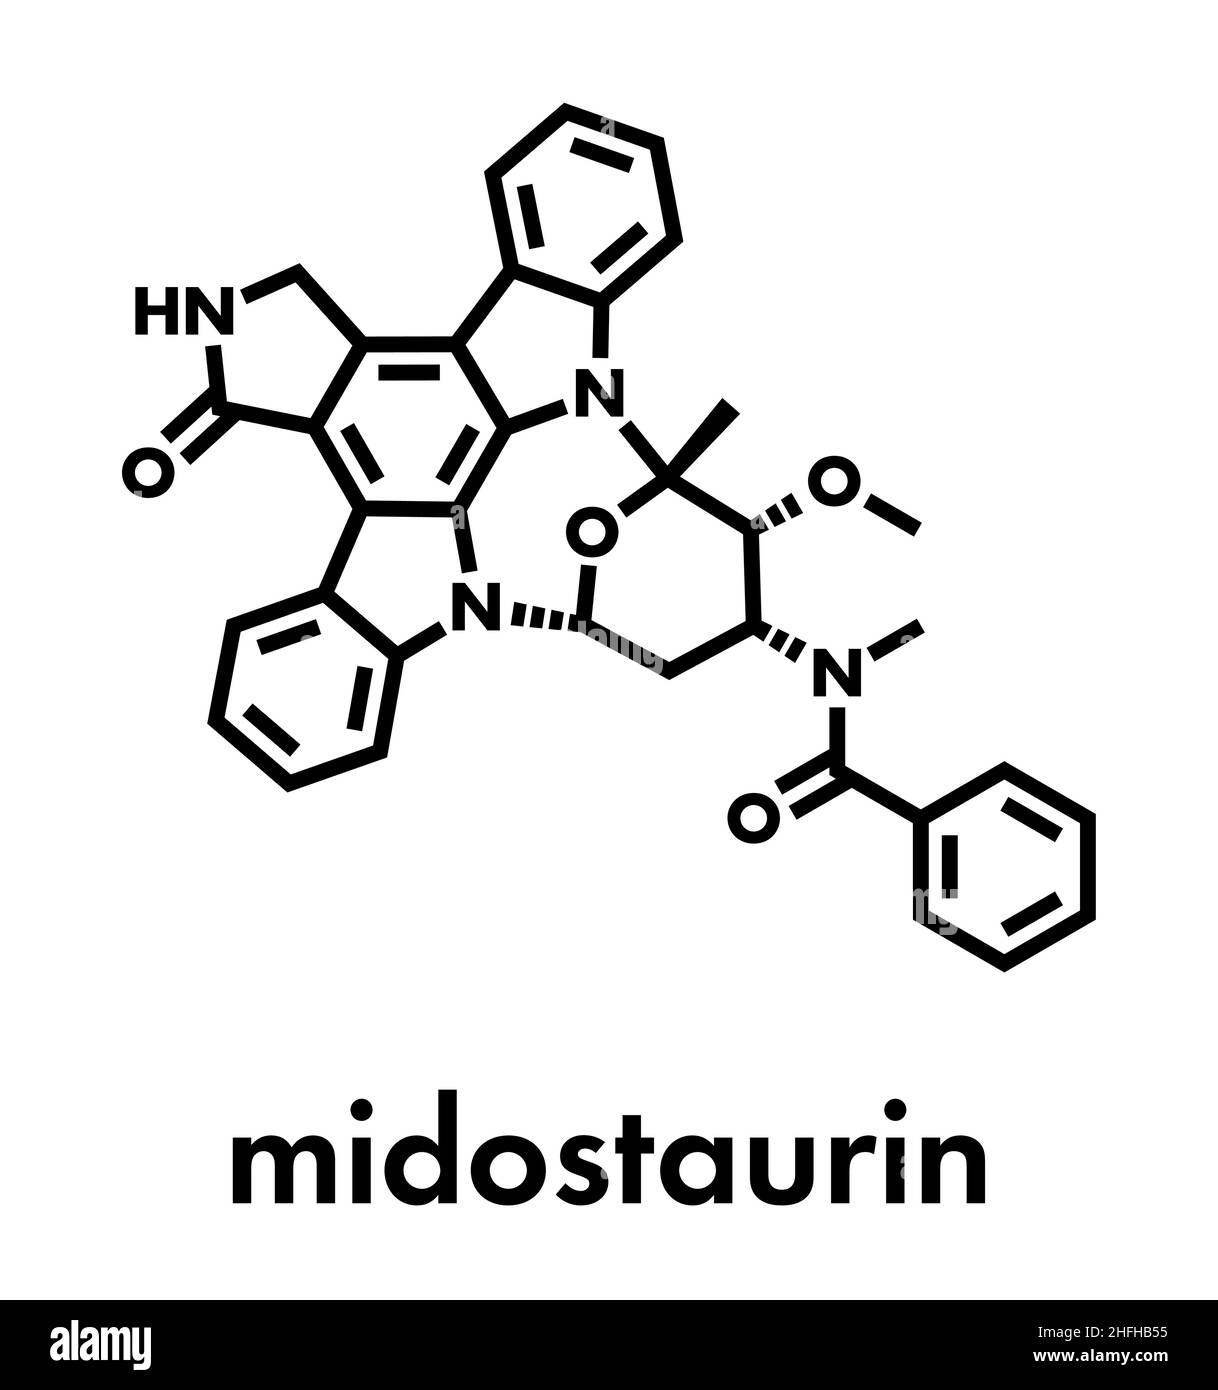 Midostaurin cancer drug molecule (protein kinase inhibitor). Skeletal formula. Stock Vector